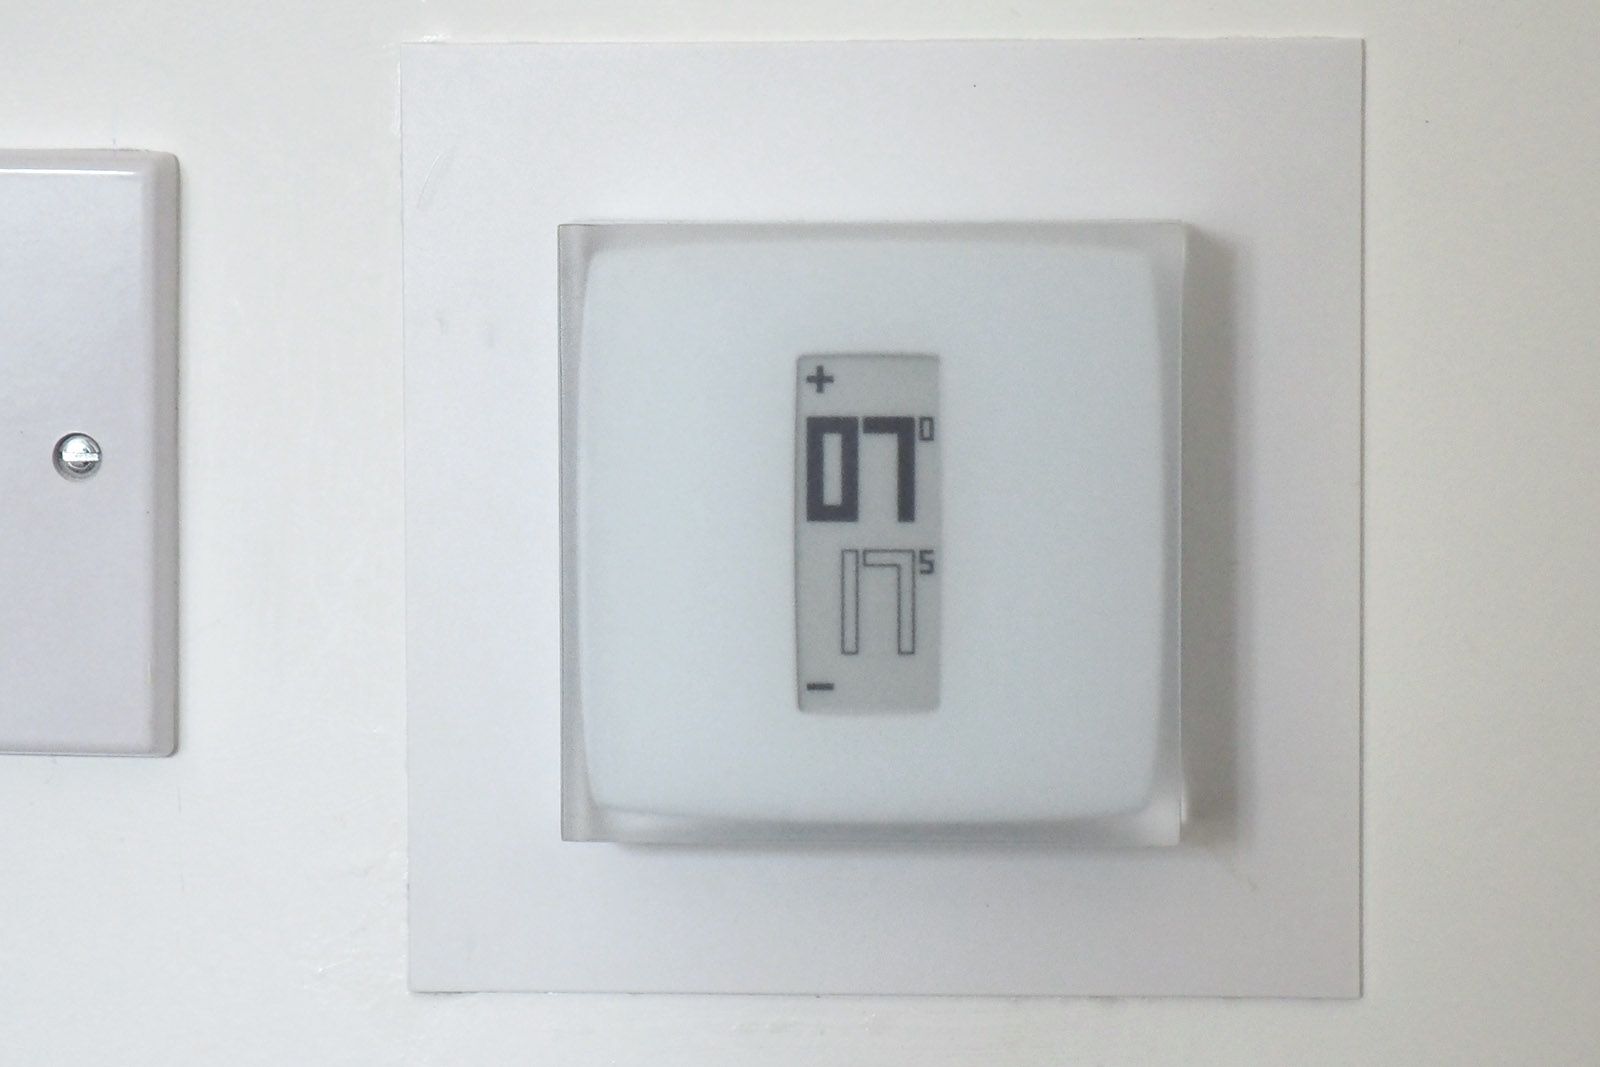 Netatmo Smart Thermostat review photo 9